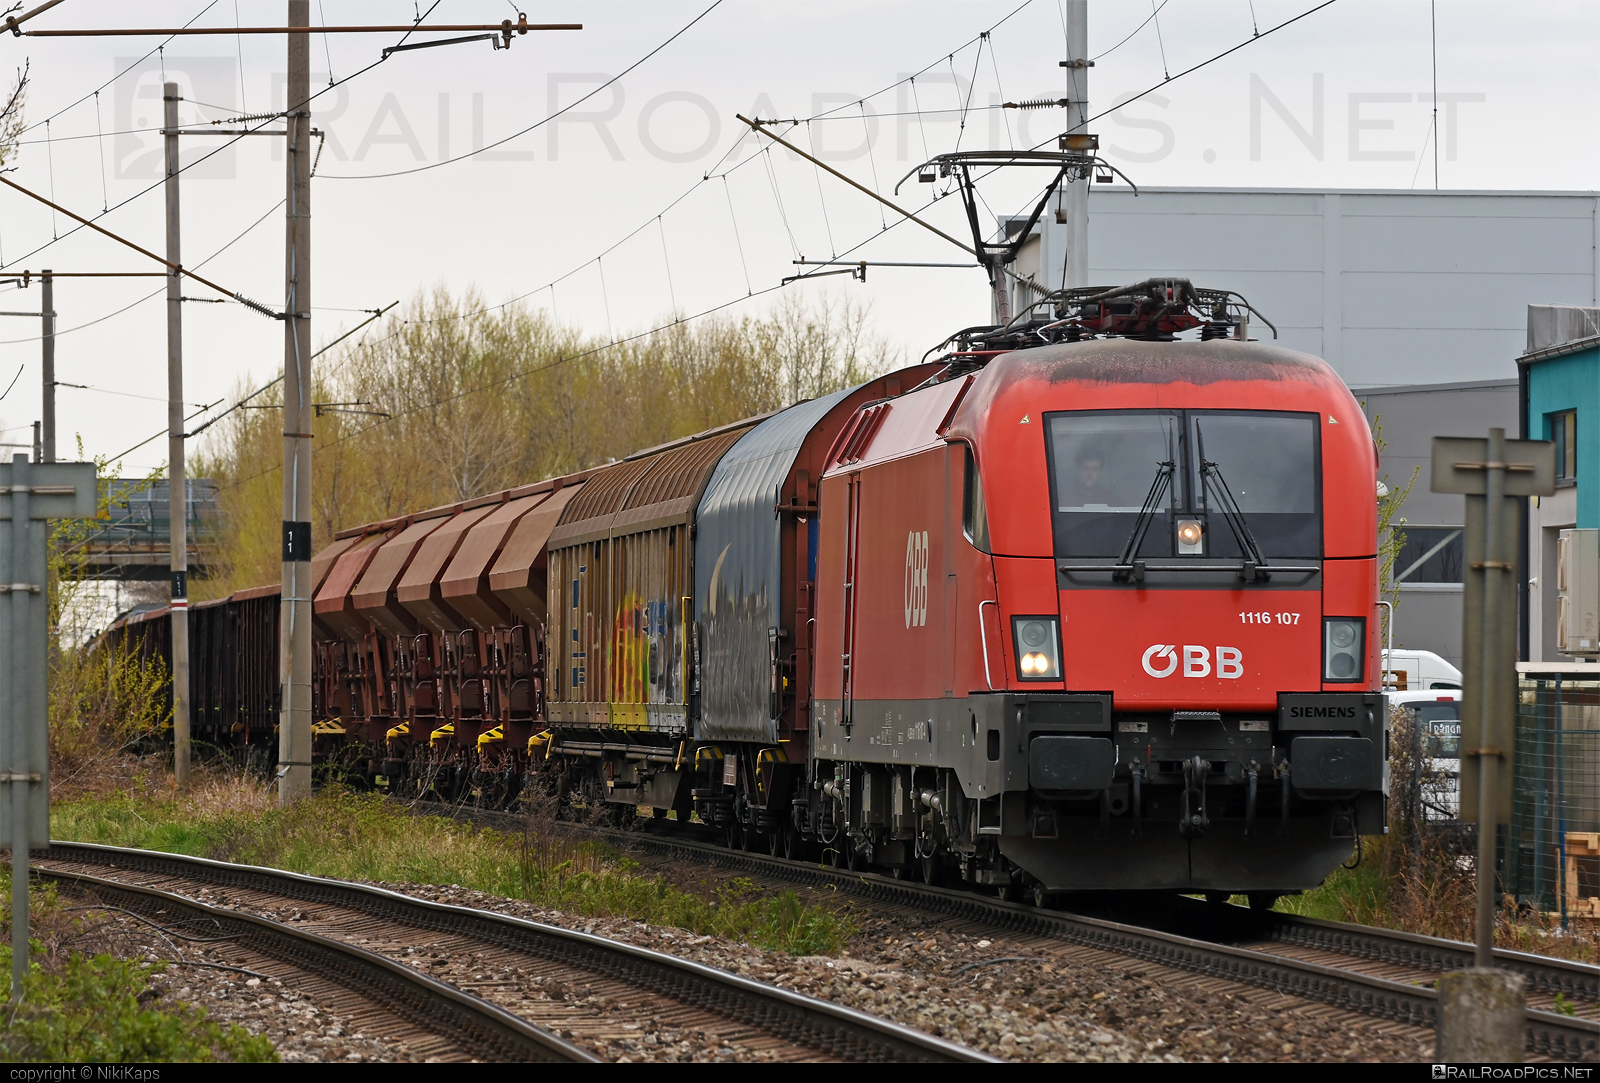 Siemens ES 64 U2 - 1116 107 operated by Rail Cargo Austria AG #es64 #es64u2 #eurosprinter #mixofcargo #obb #osterreichischebundesbahnen #rcw #siemens #siemensEs64 #siemensEs64u2 #siemenstaurus #taurus #tauruslocomotive